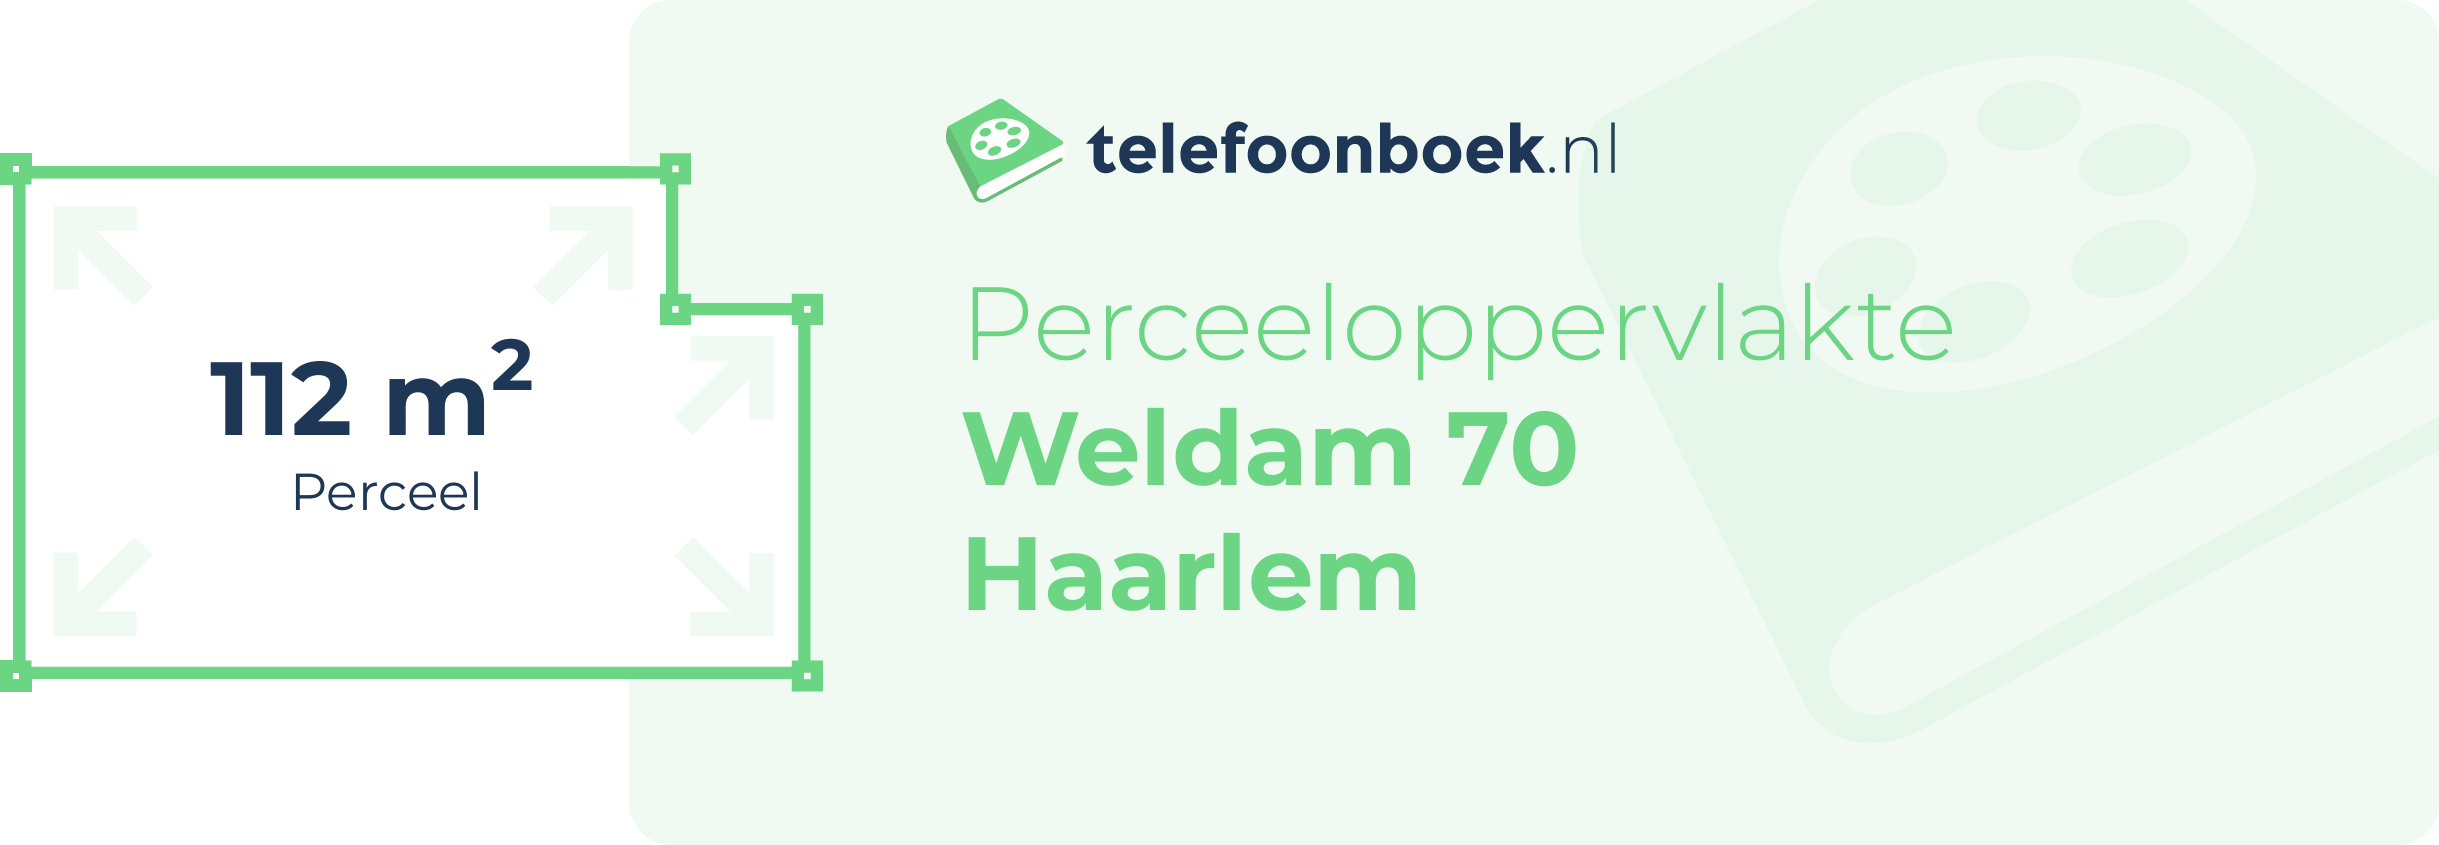 Perceeloppervlakte Weldam 70 Haarlem